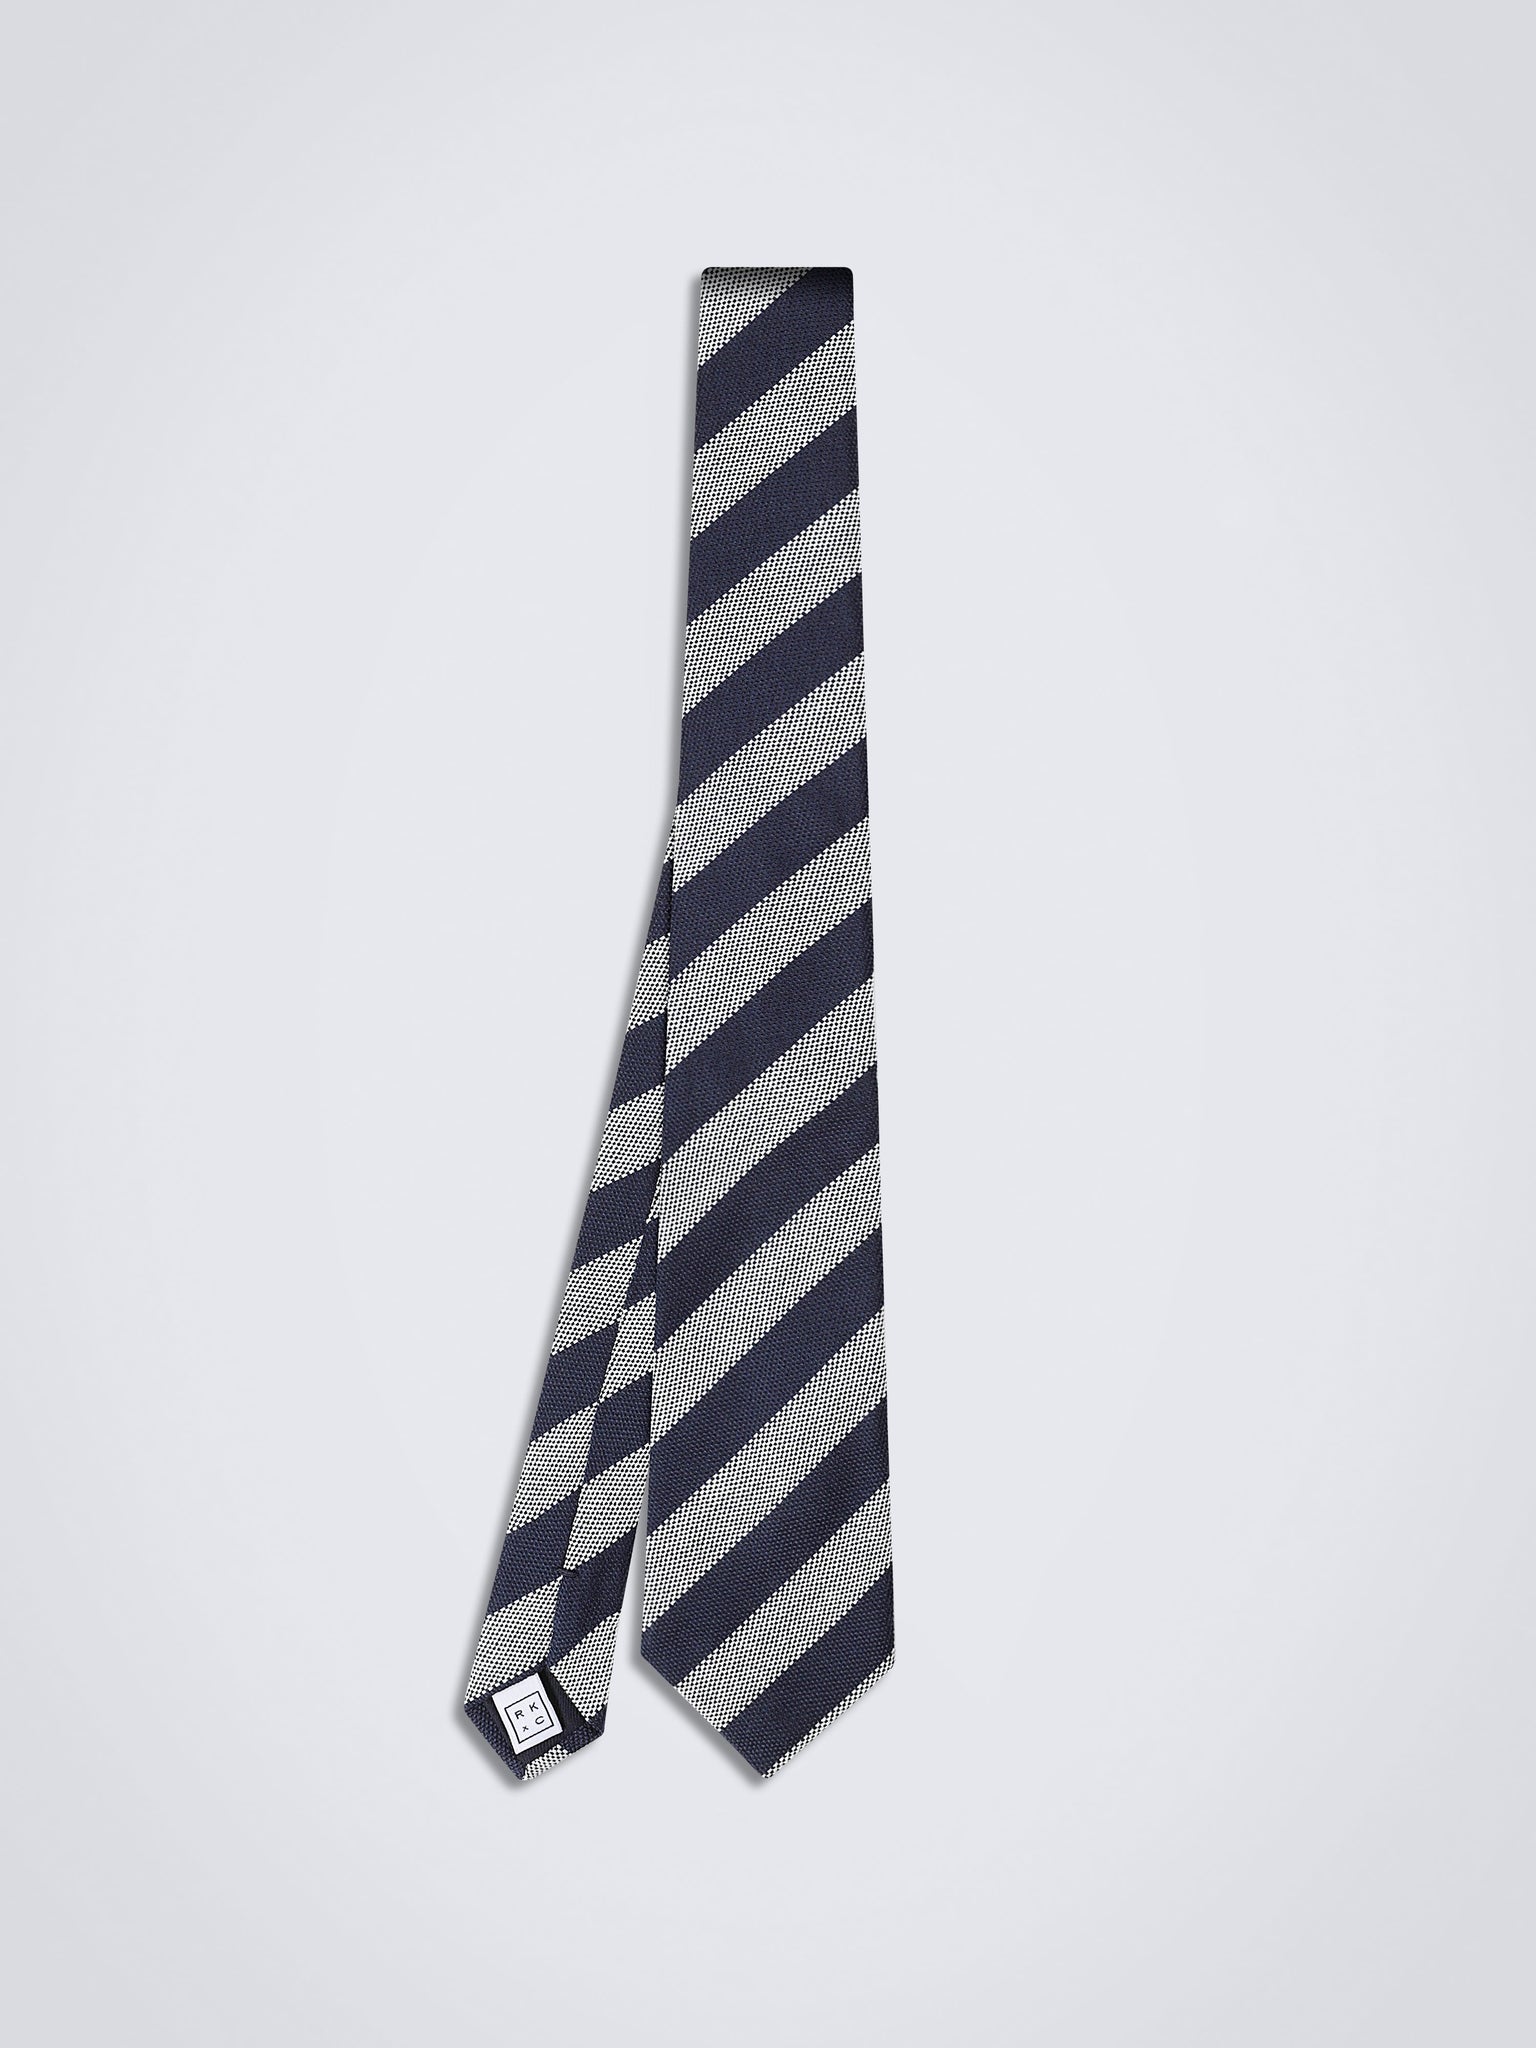 Chokore Stripes (Navy & Silver) Necktie